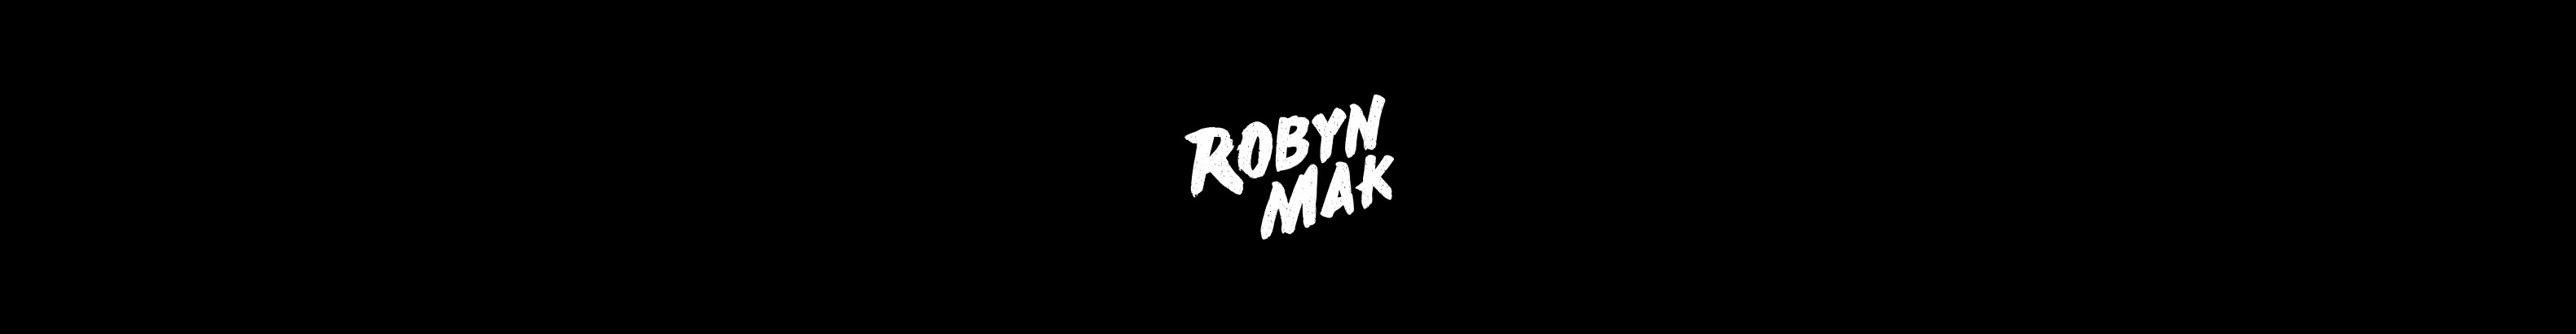 Robyn Makinson's profile banner